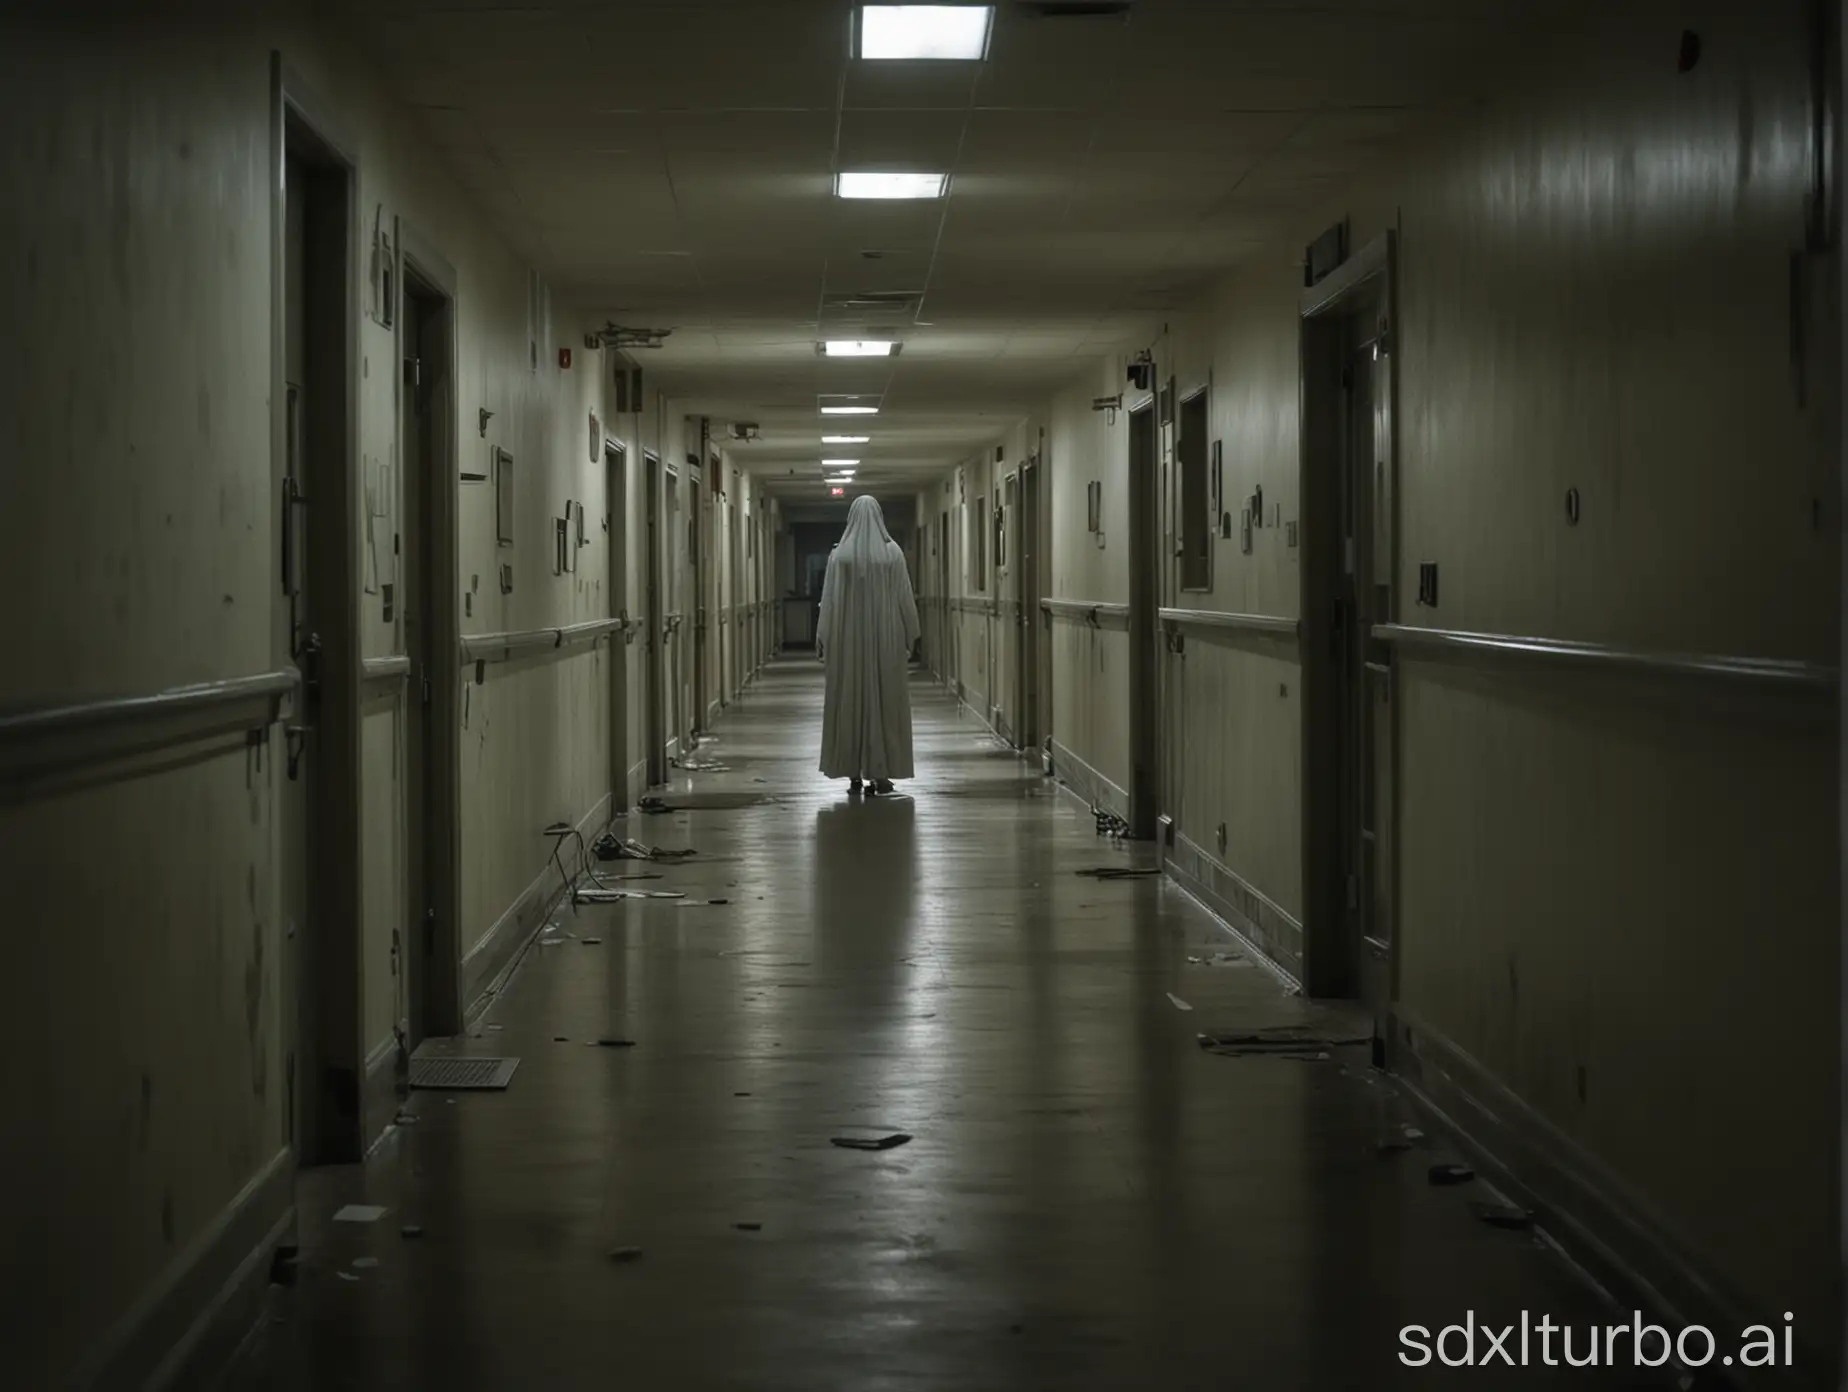 Eerie-Encounter-Ghostly-Presence-in-Abandoned-Hospital-Corridor